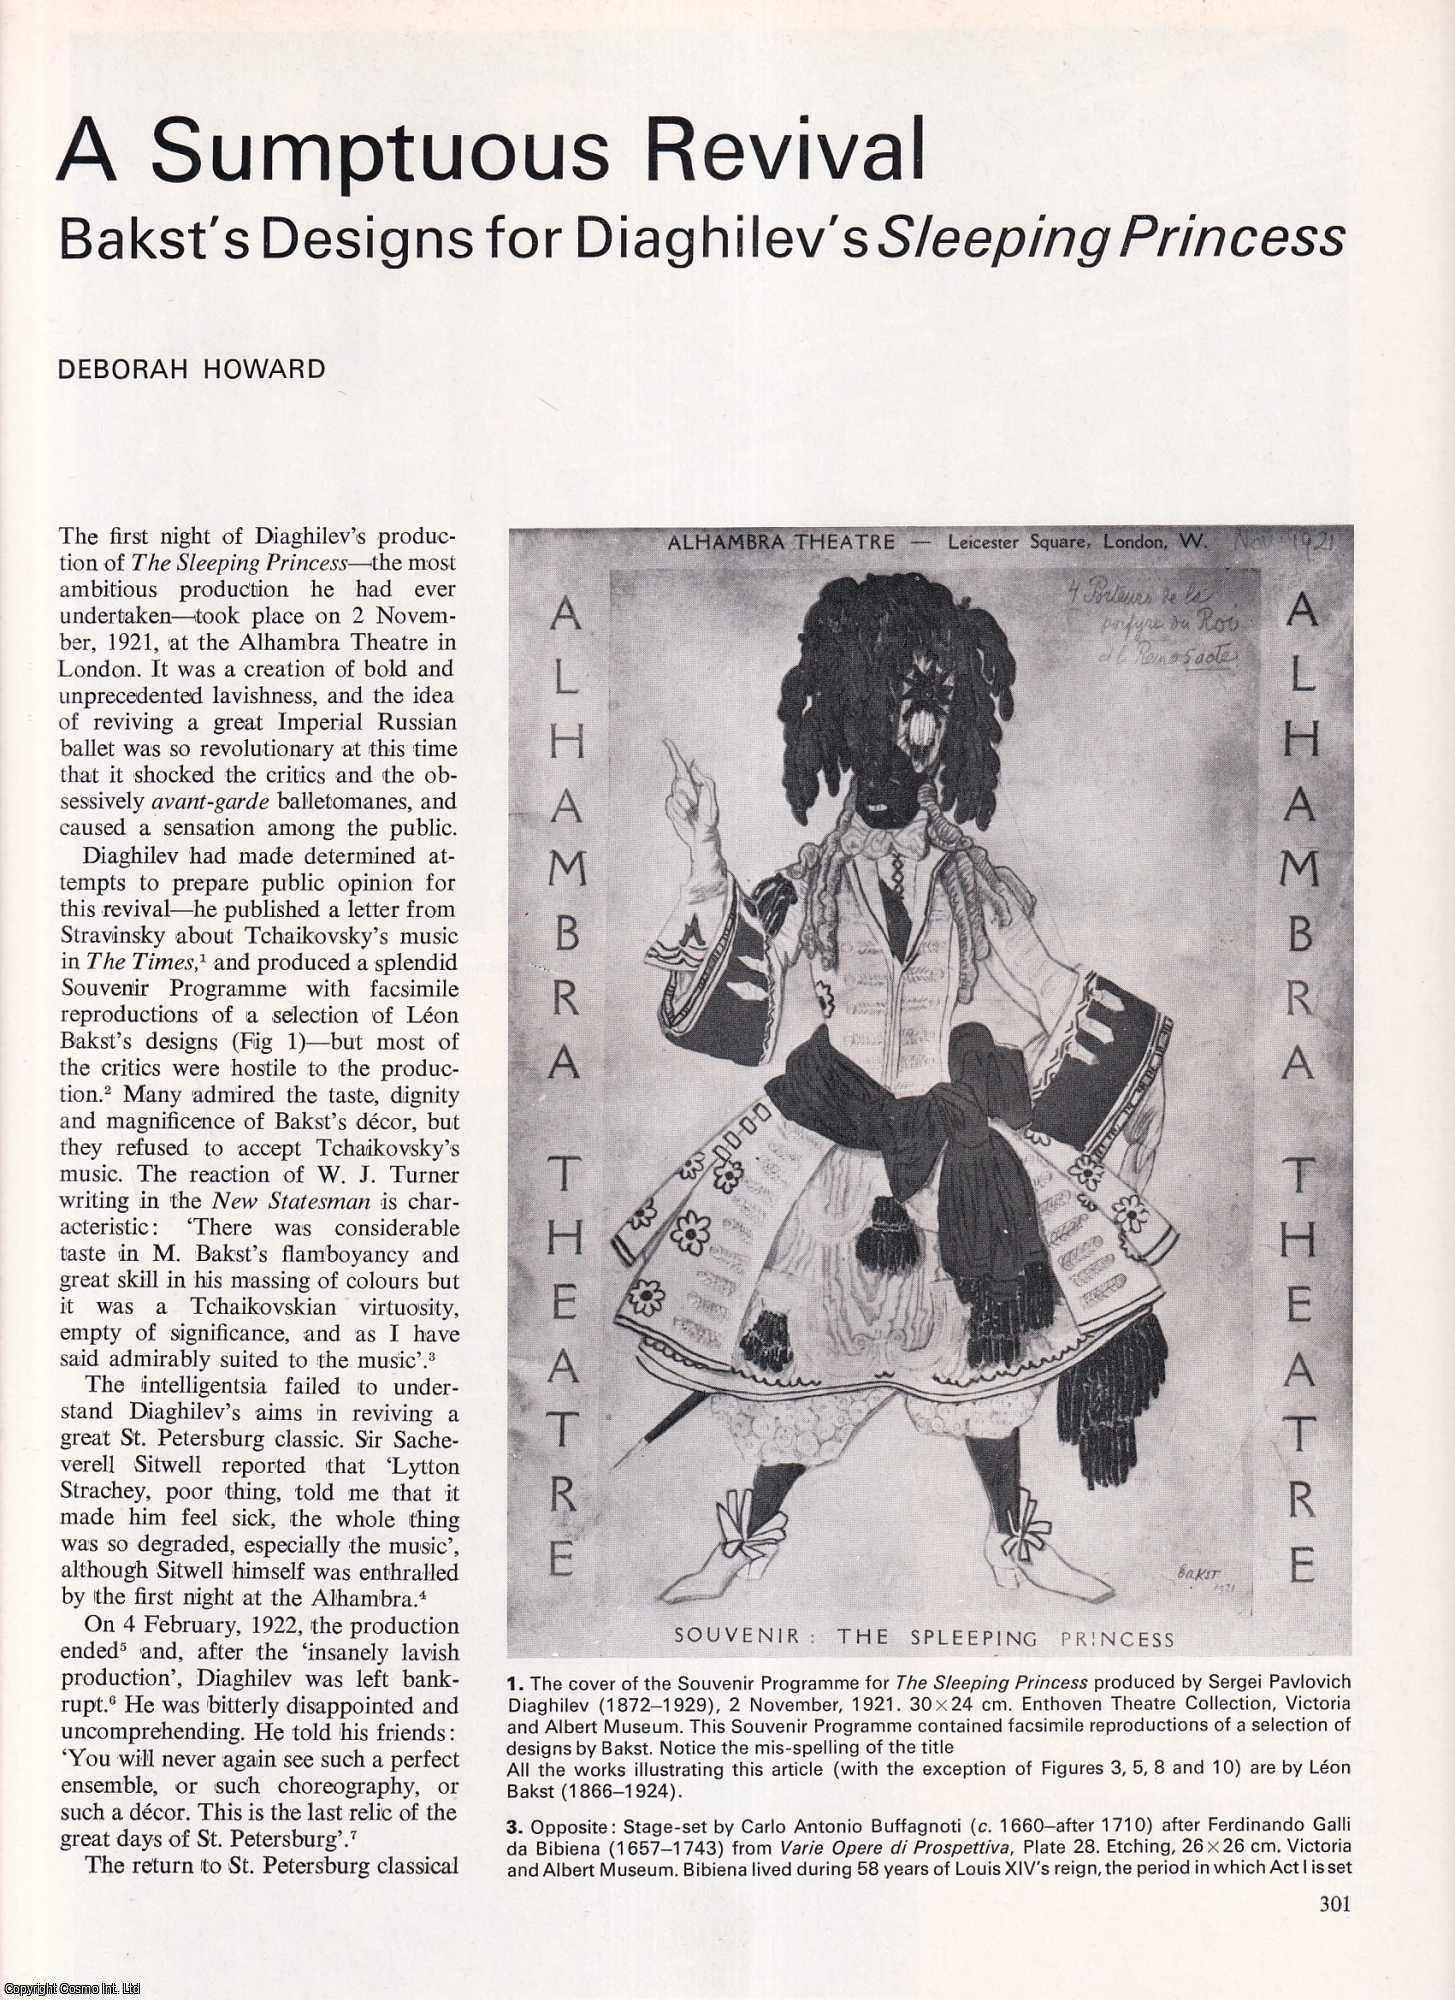 Deborah Howard - Bakst's Designs for Diaghilev's Sleeping Princess. An original article from Apollo, International Magazine of the Arts, 1970.